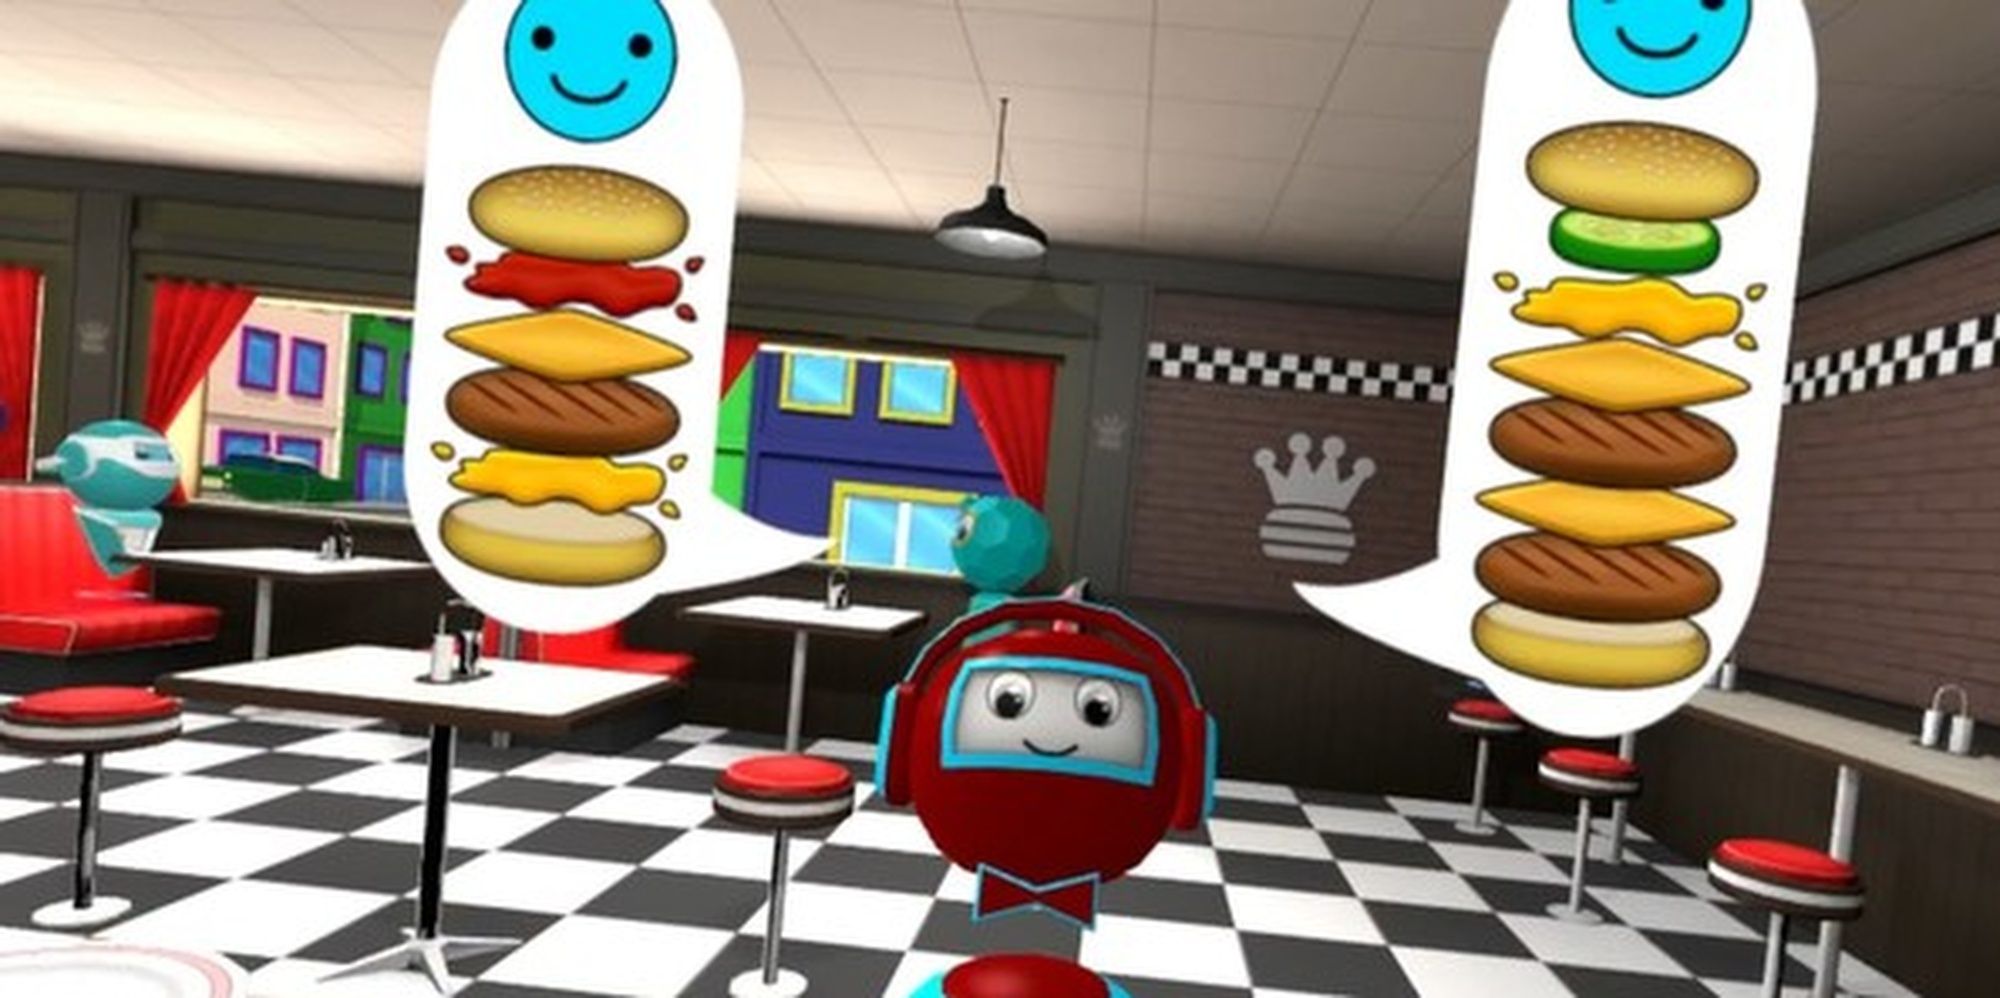 The Diner Duo: Robot Waitstaff Providing Customer Burger Orders